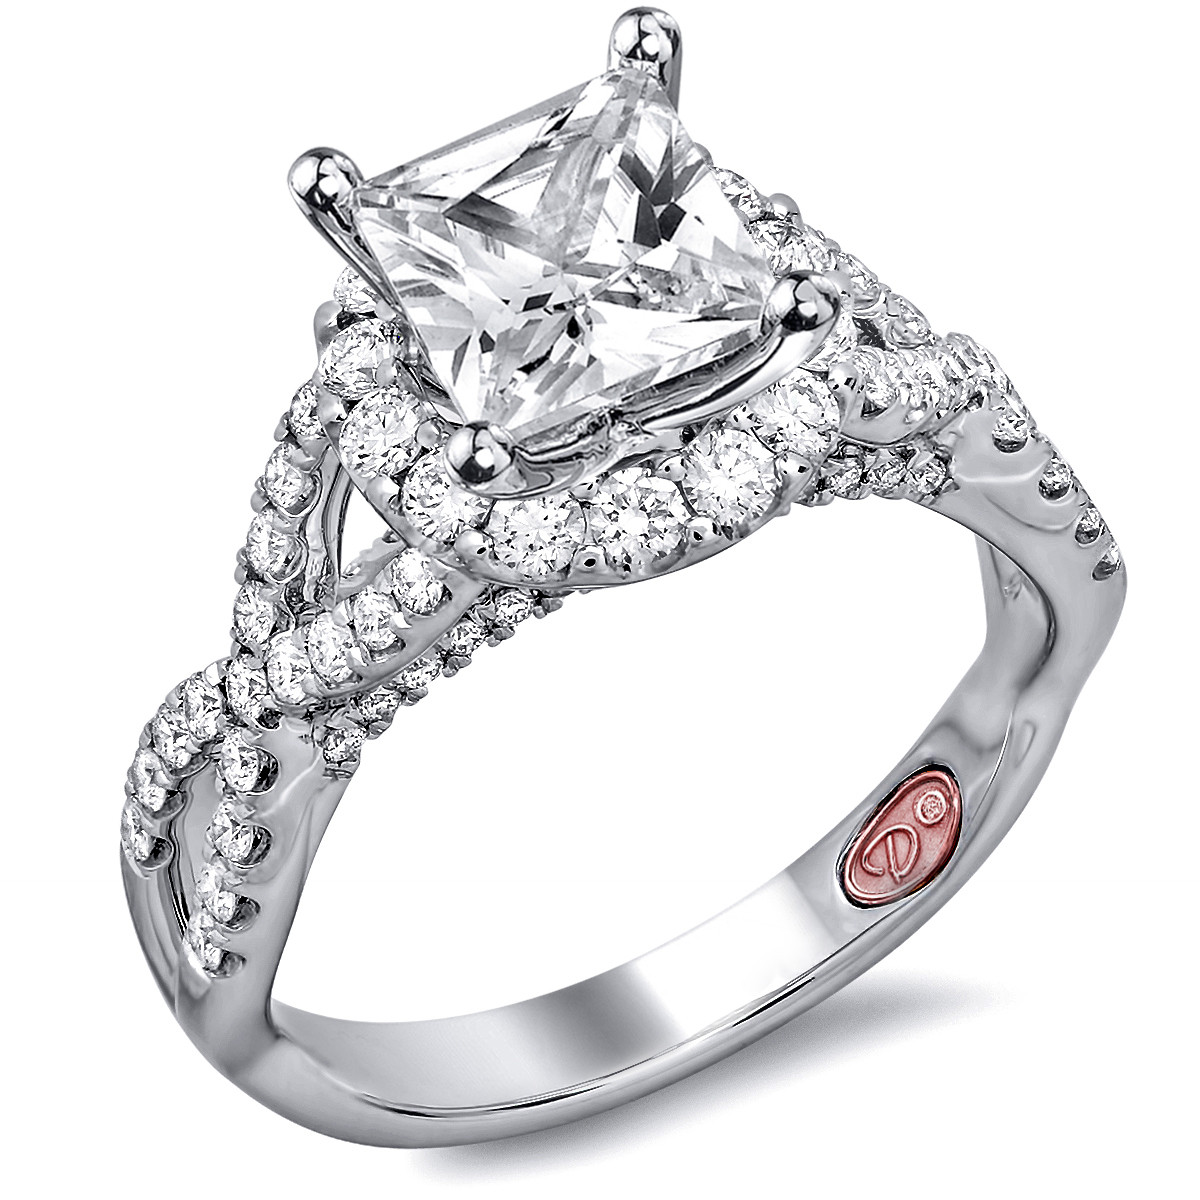 Princess Cut Wedding Ring
 Twisted Princess Cut Engagement Rings